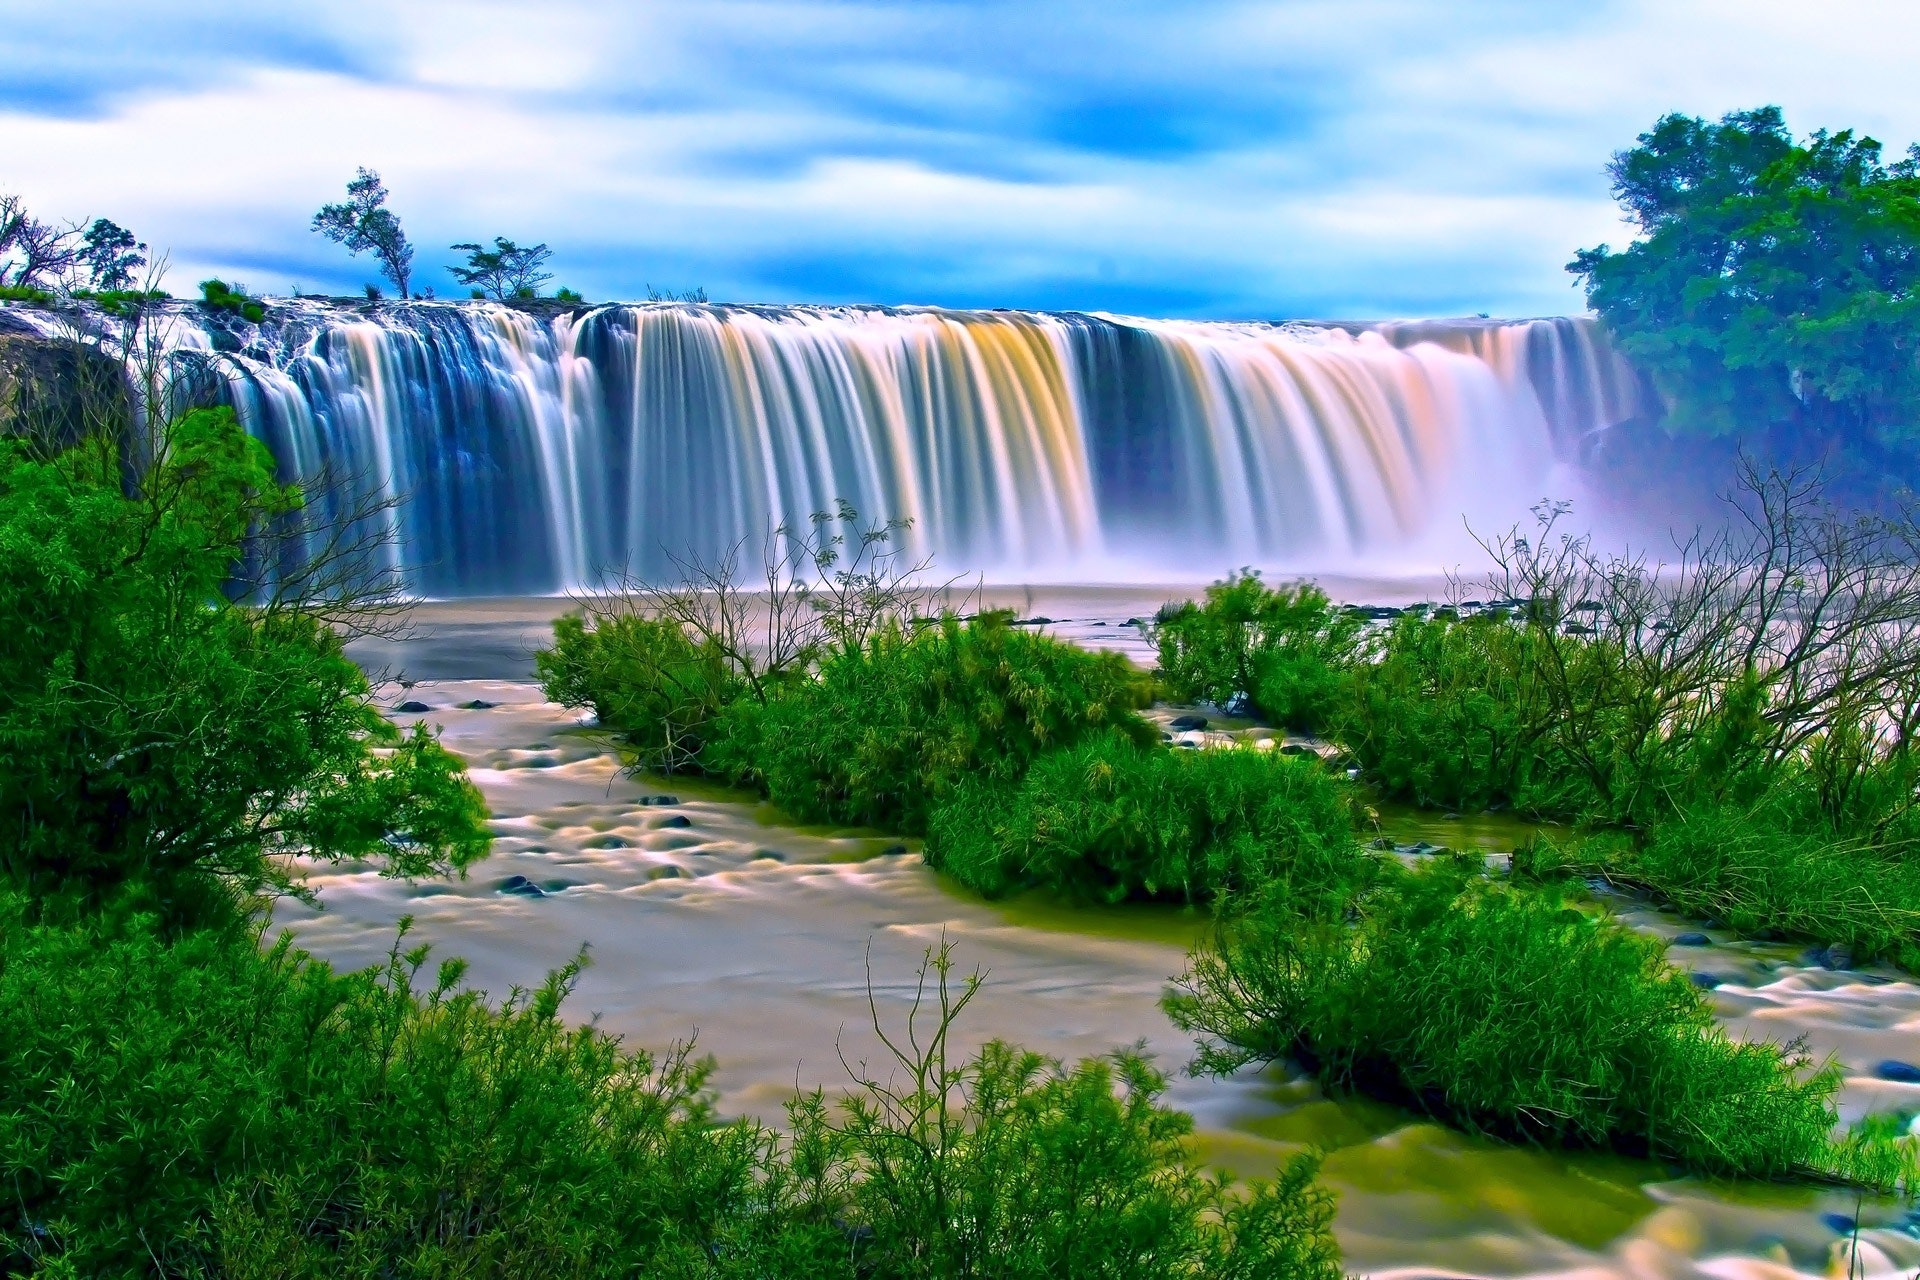 Water Falls Surrounding Green Grass during Daytime, HD wallpaper, Landscape, Long exposure, Natural, HQ Photo